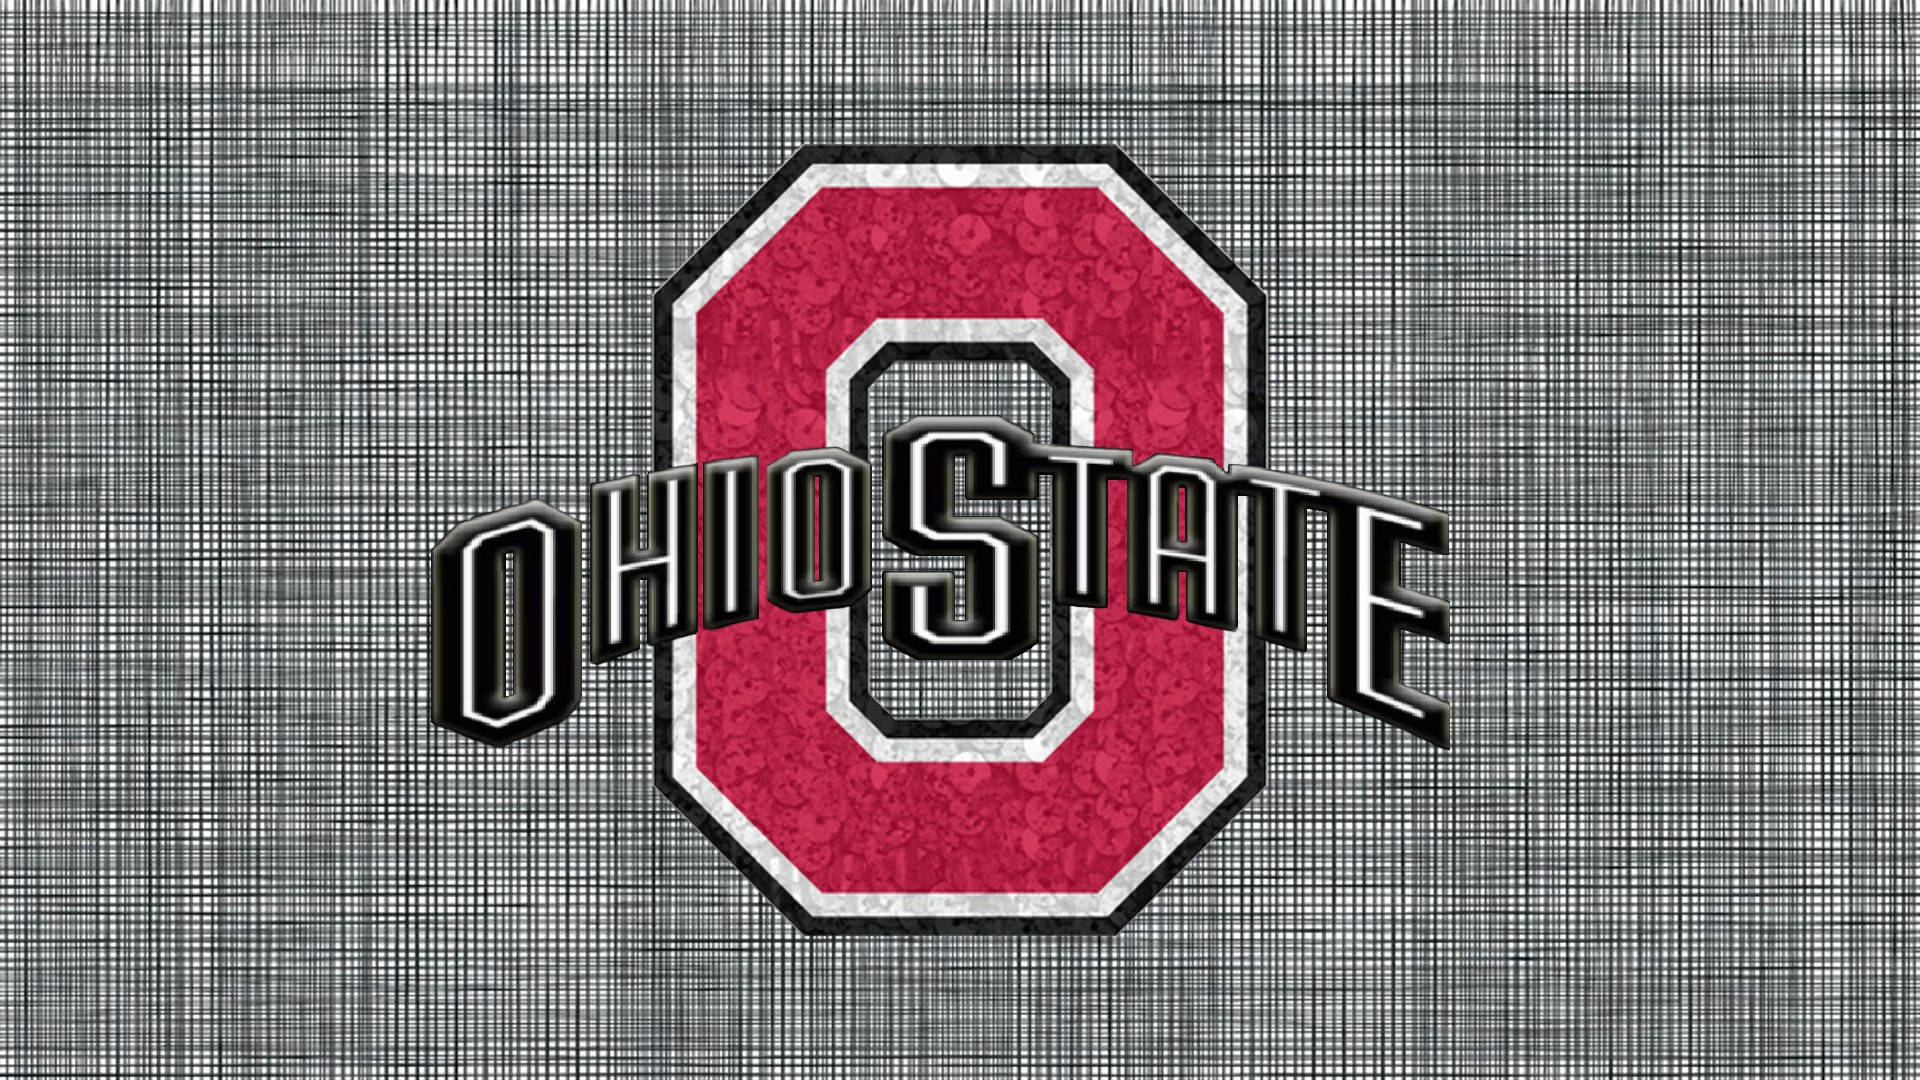 Ohio State University Textile Pattern Picture